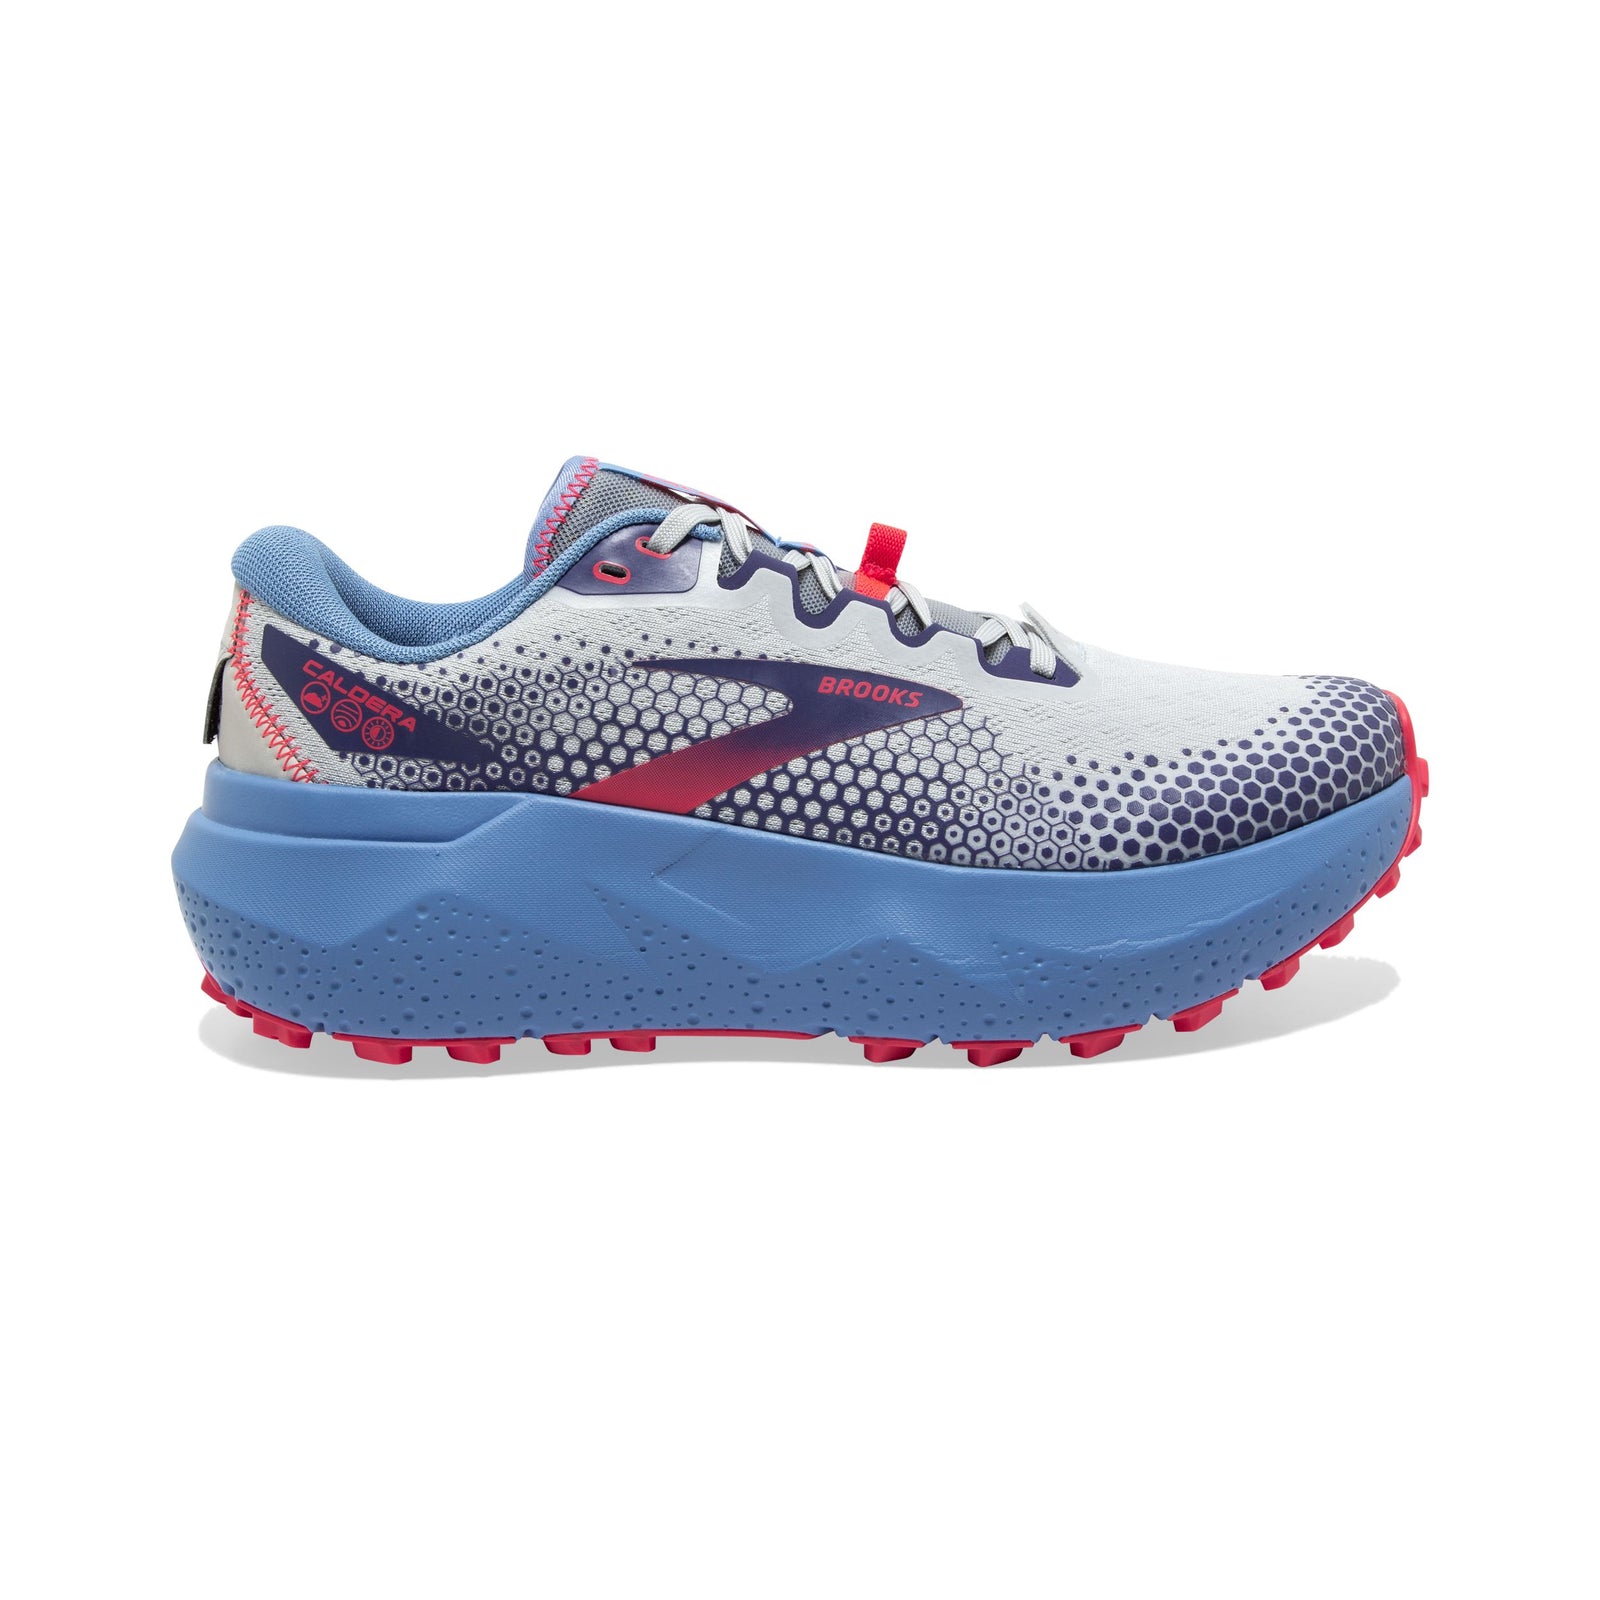 Brooks Women's Caldera 6 Trail Running Shoes Oyster/Blissful Blue/Pink US 5.5 